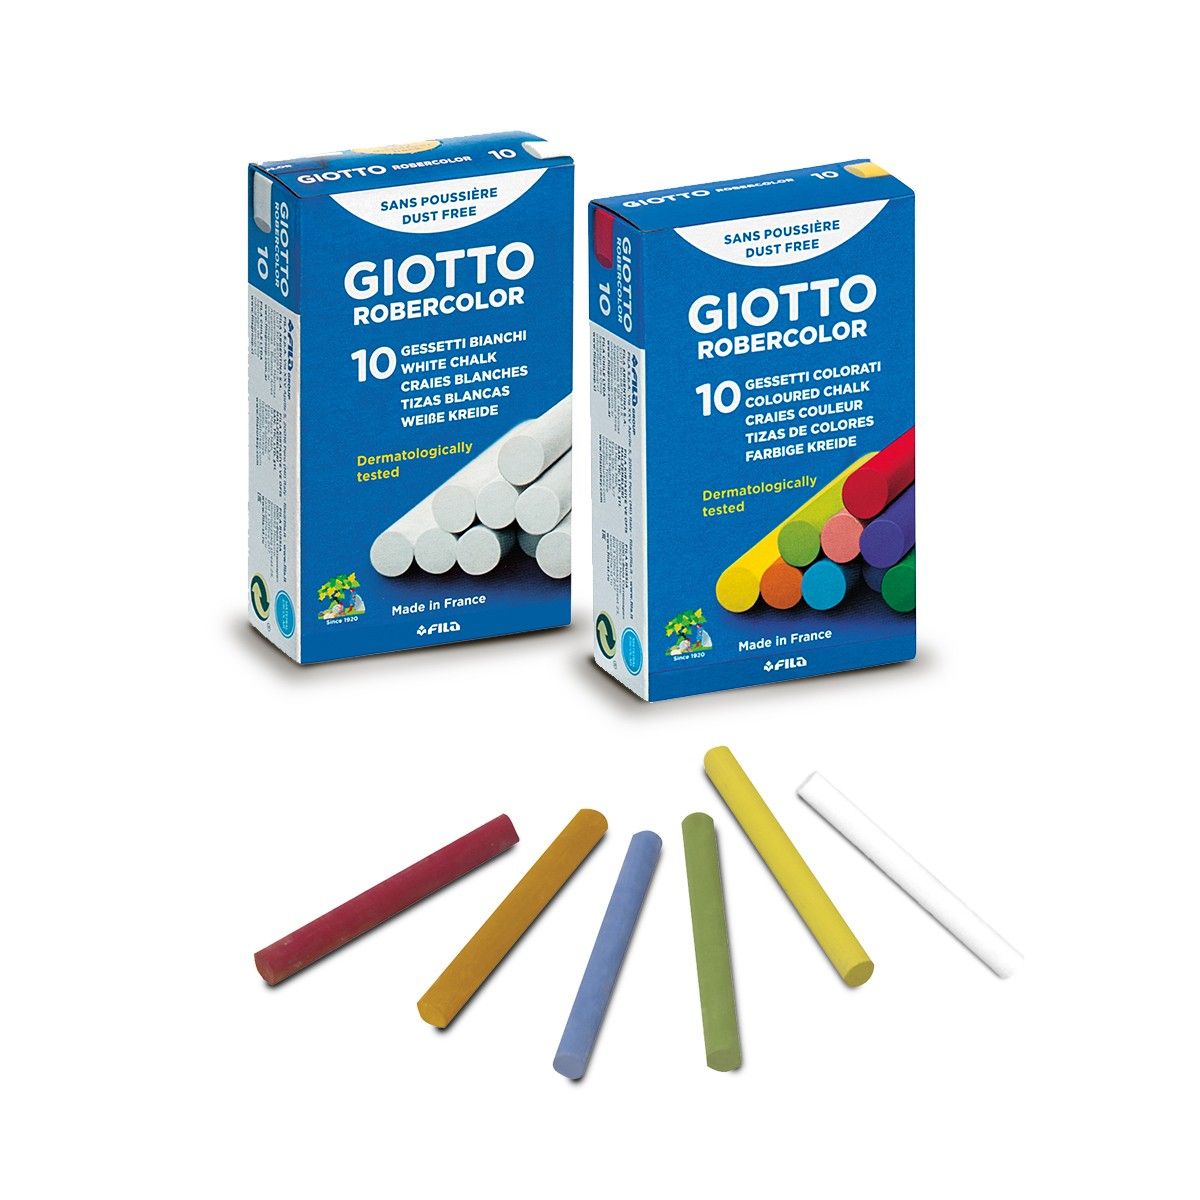 White Giotto Robercolor 100 Asst Colour Or White Chalk Anti Dust Blackboard Drawing School Teacher Chalk Colour